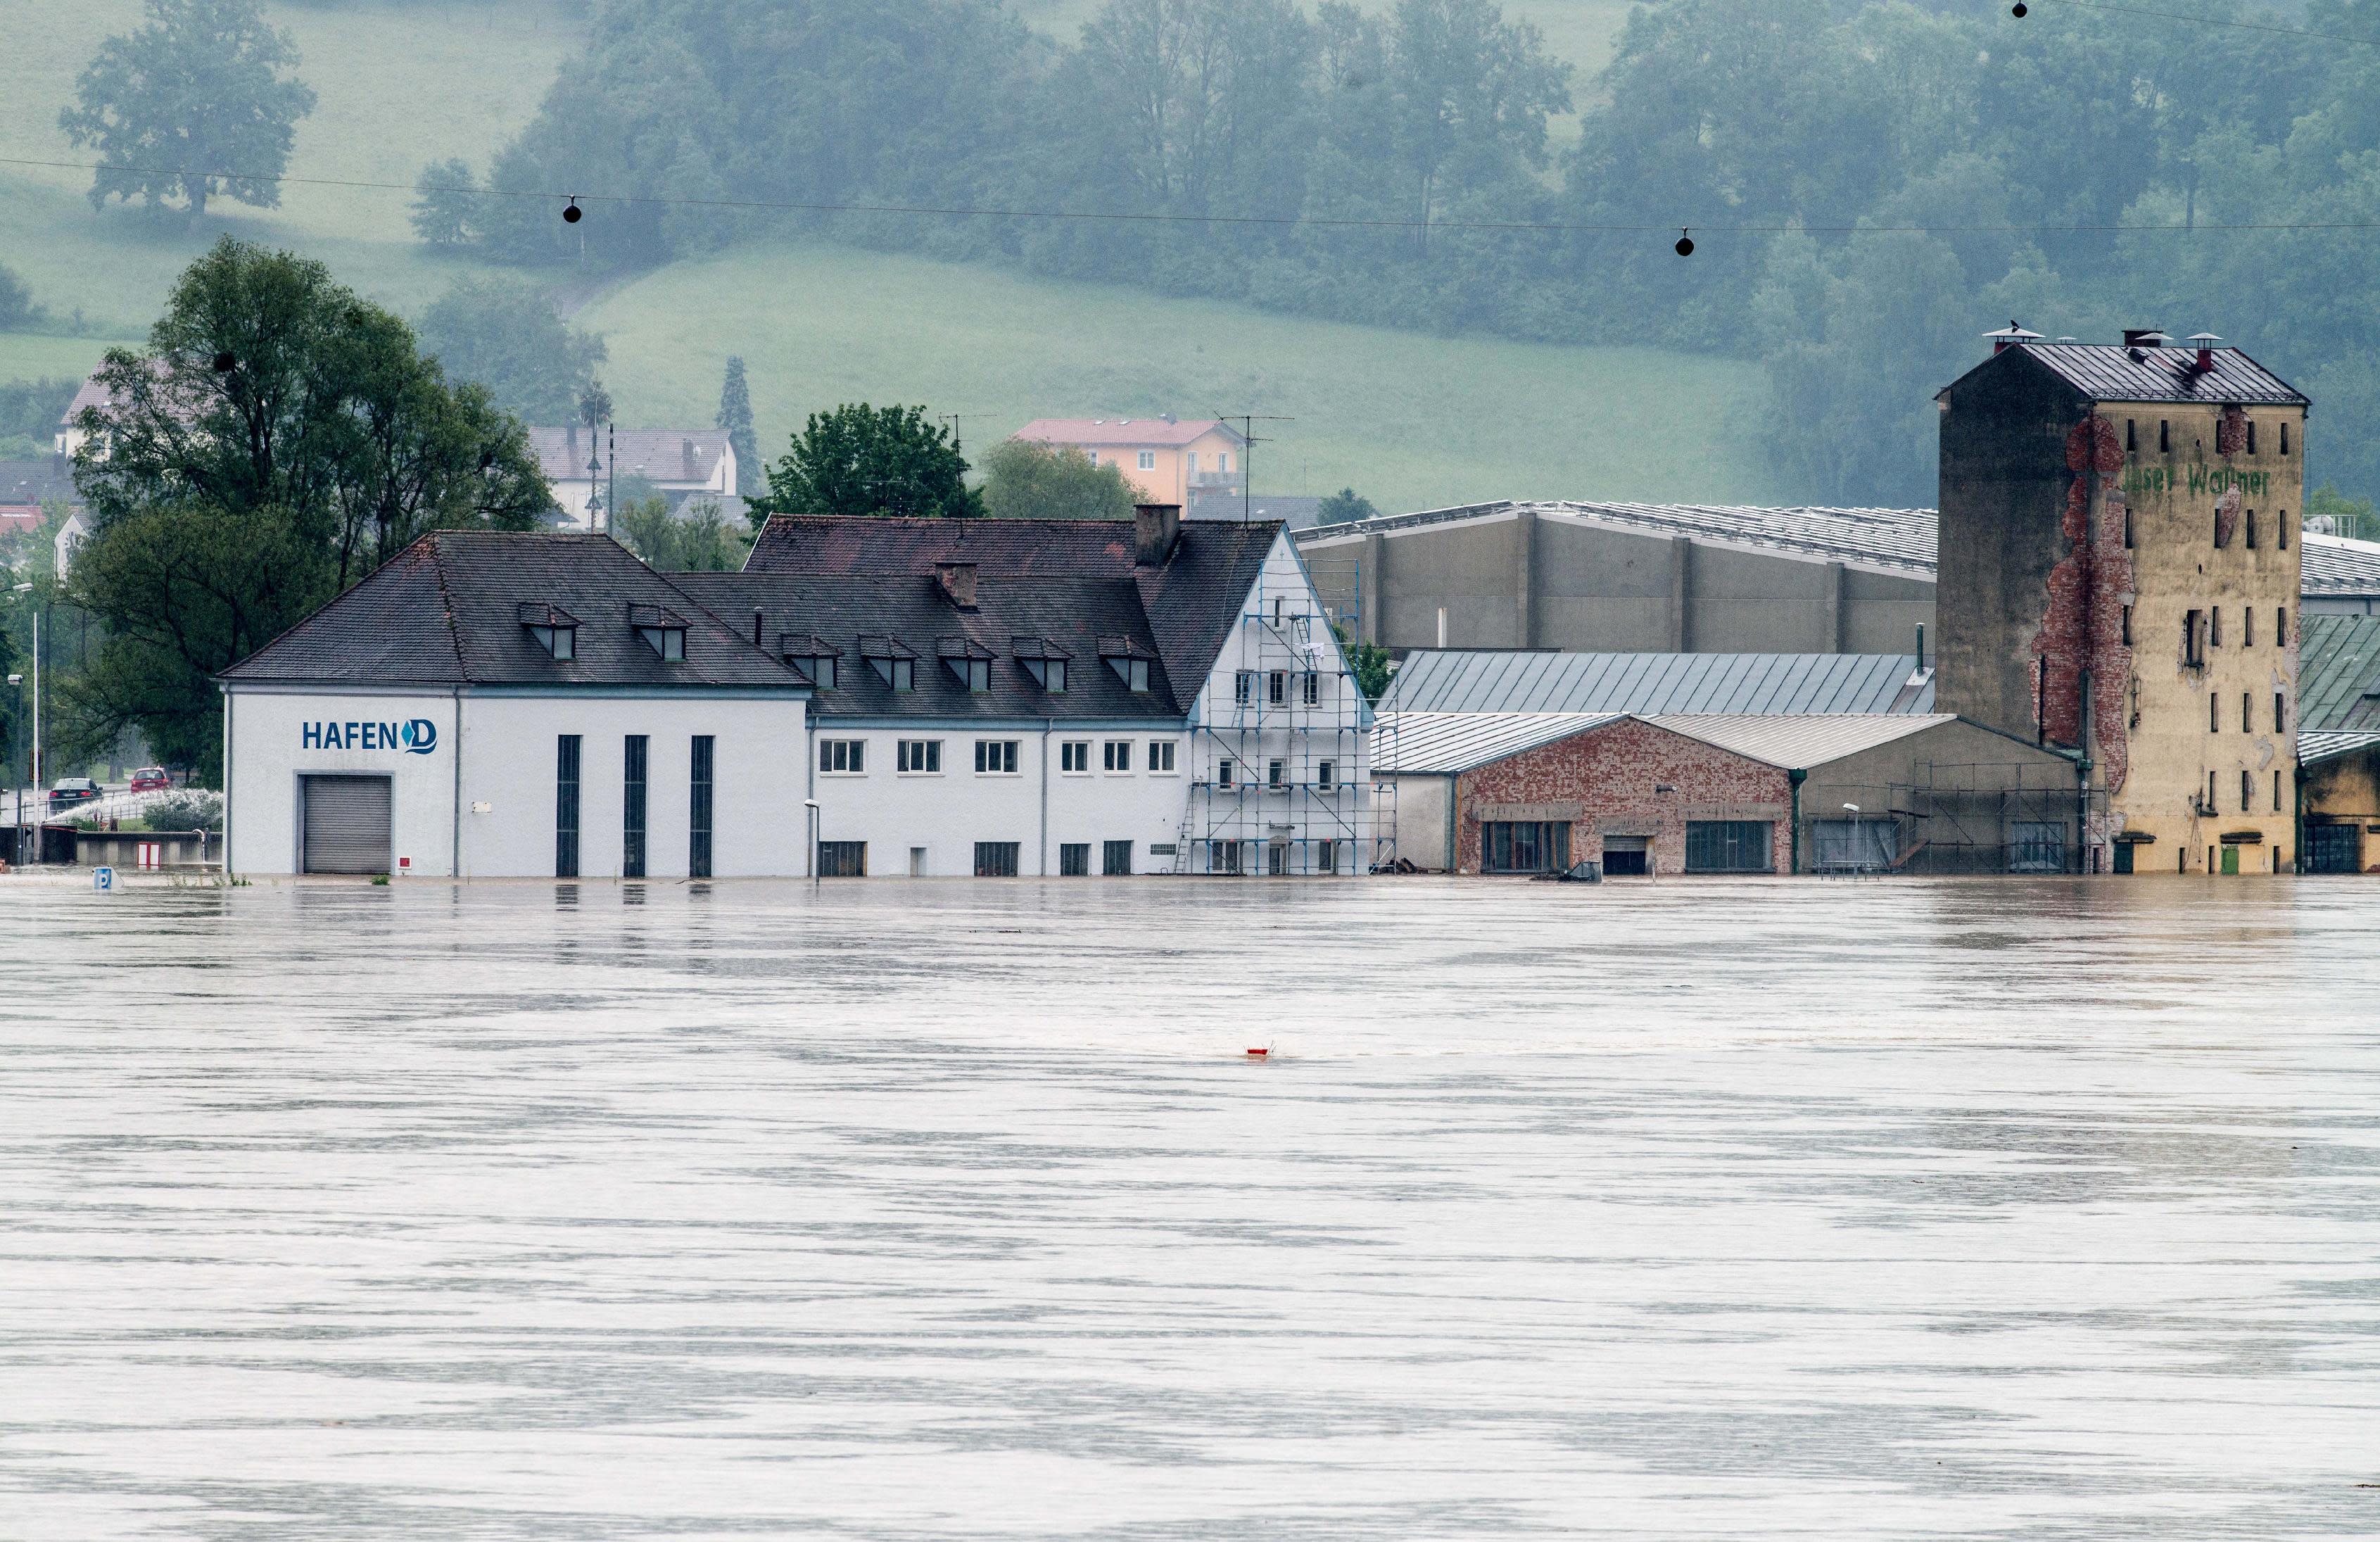 When mighty Danube floods, Europe is shaken